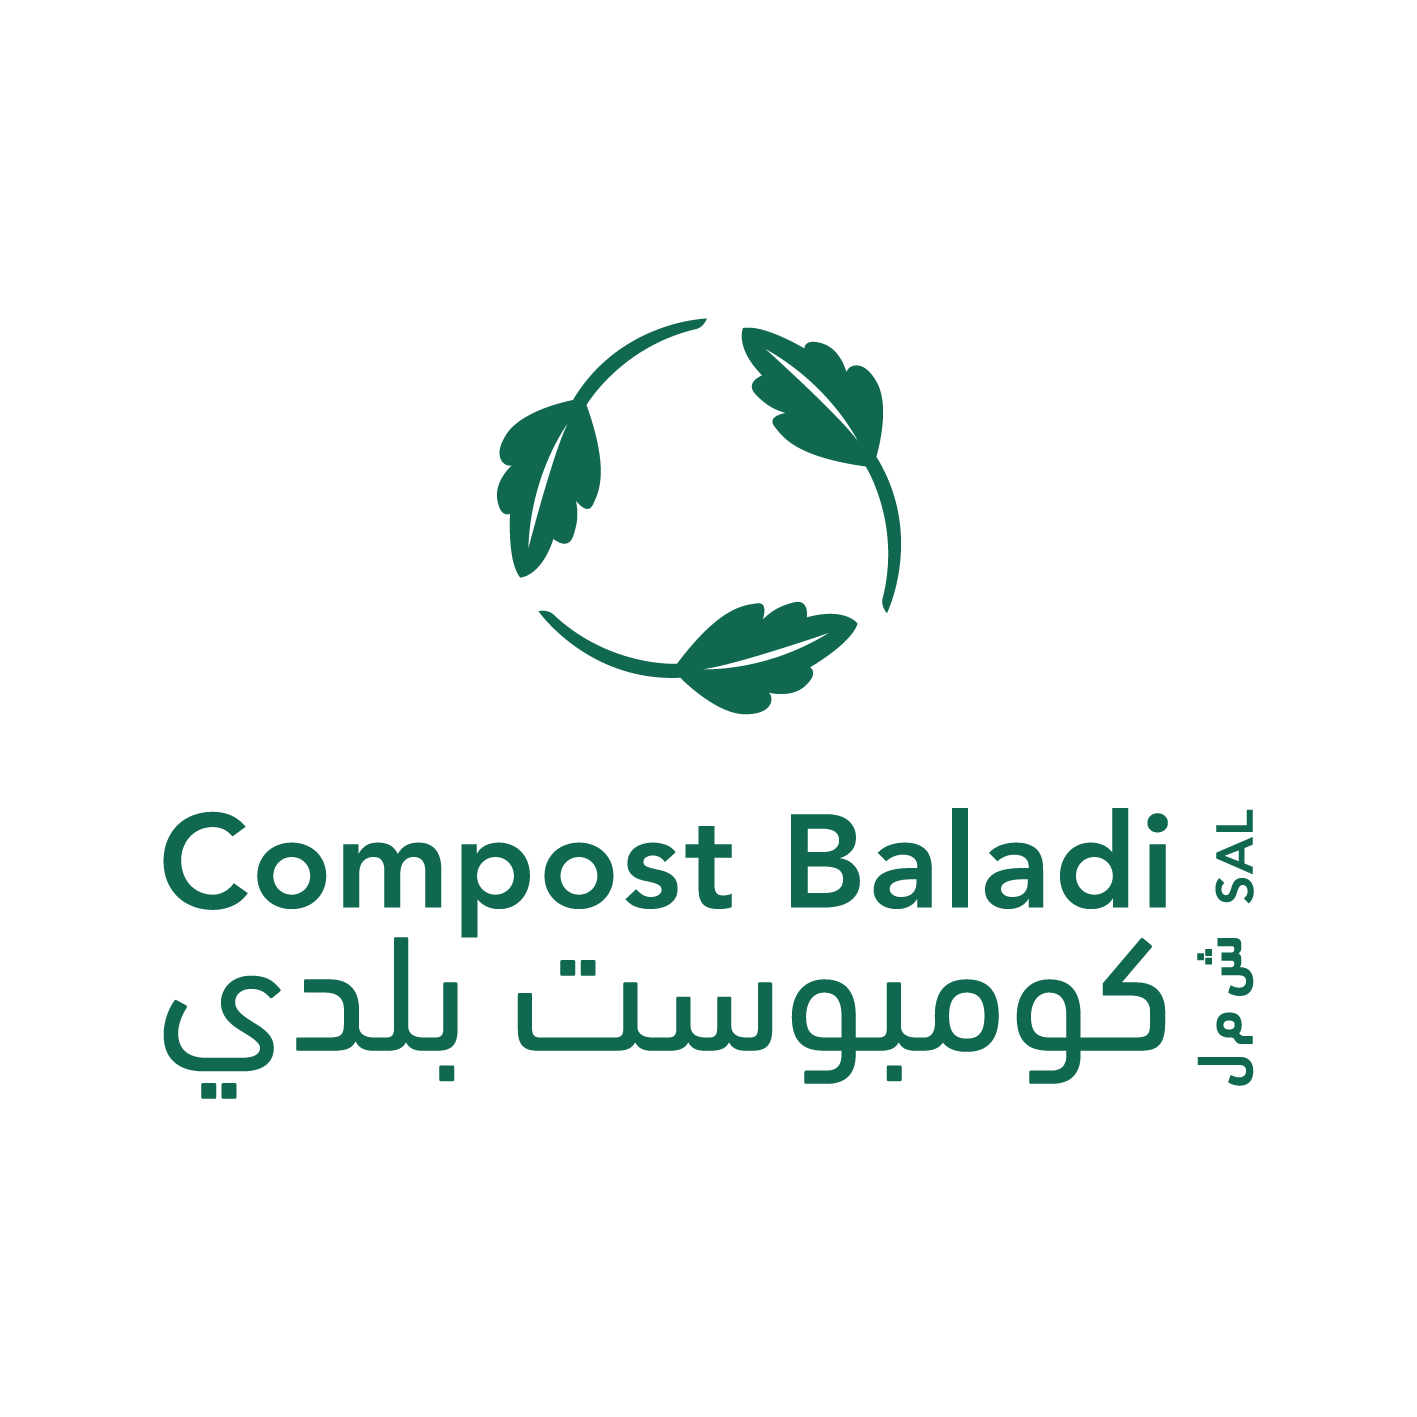 Compost Baladi